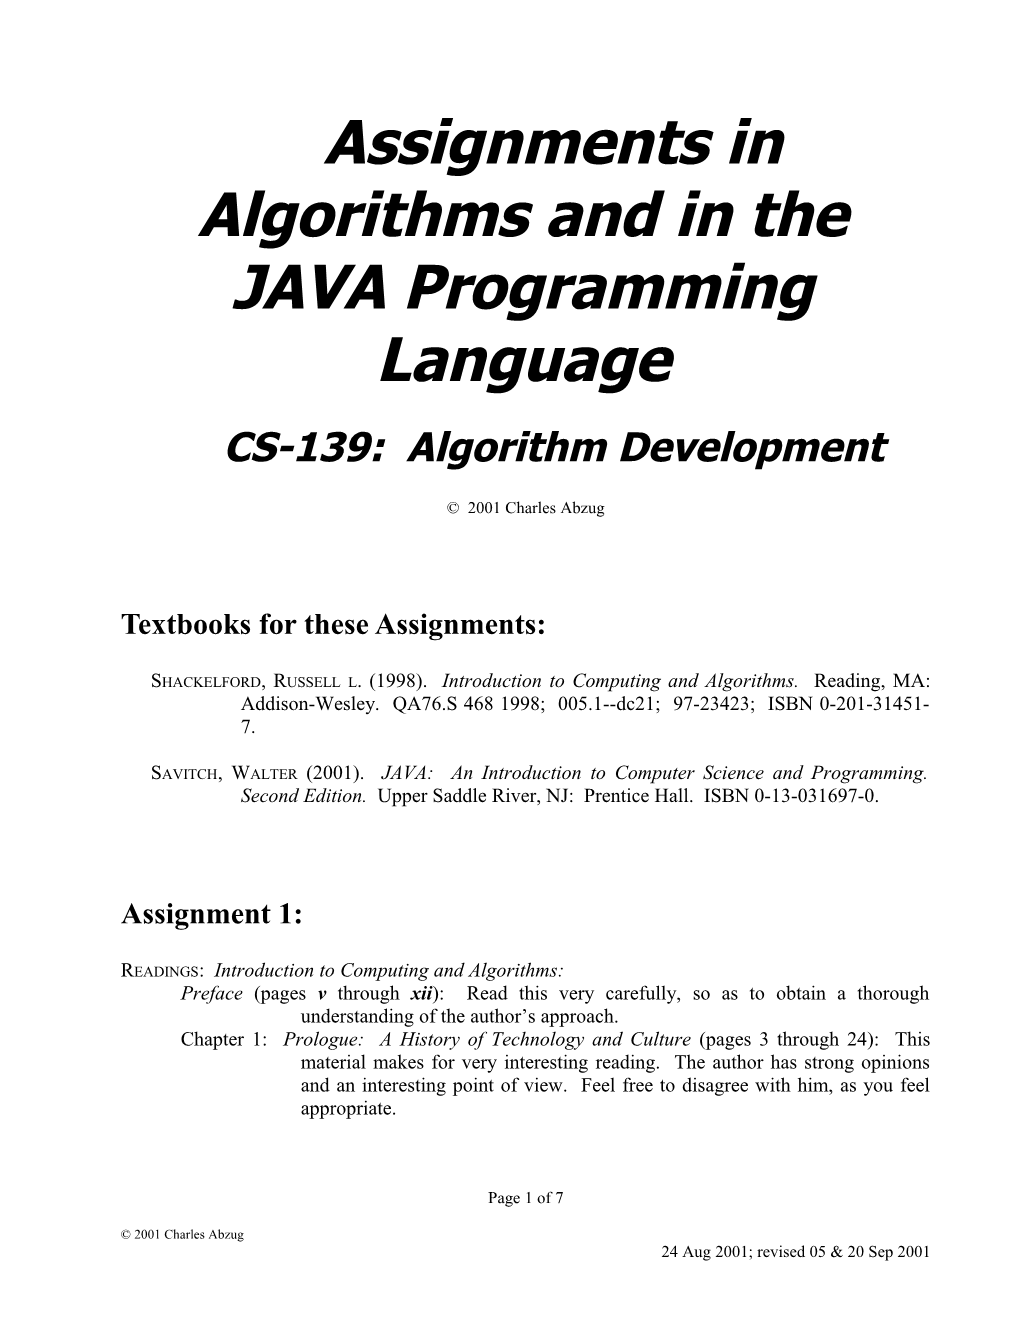 CS-139: Algorithm Development Assignments